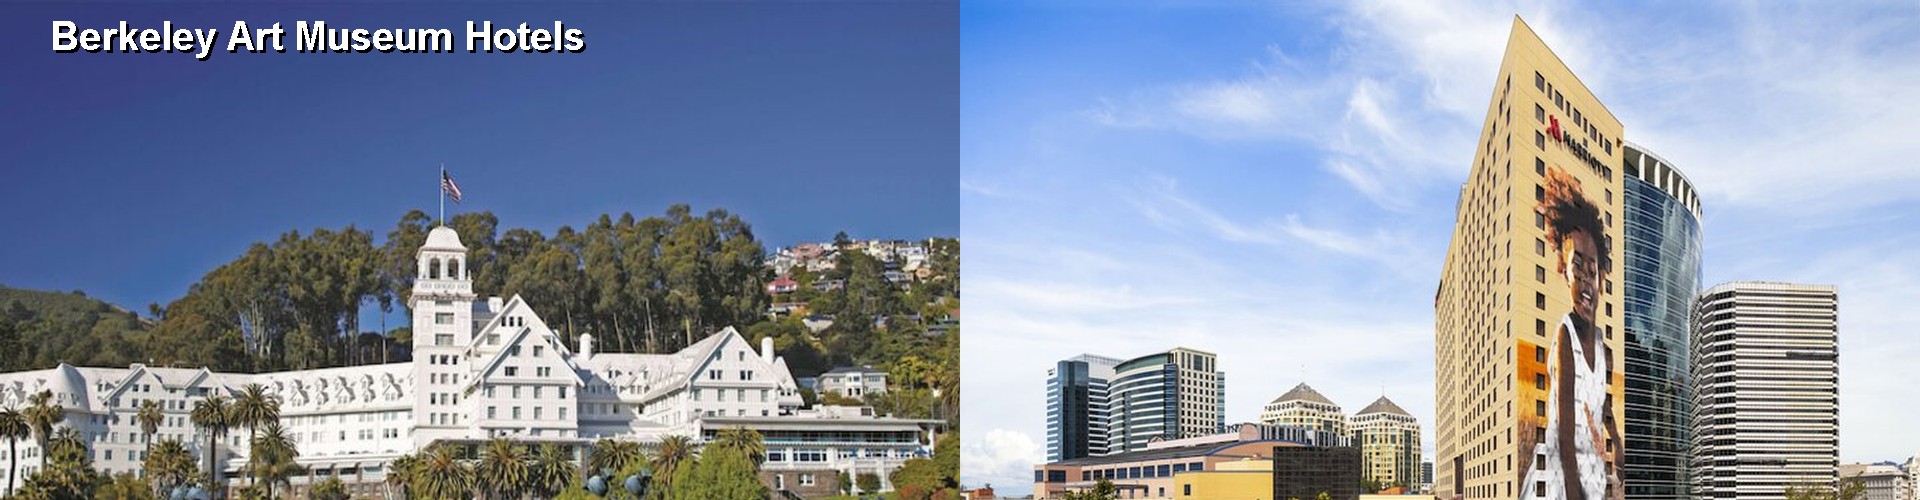 2 Best Hotels near Berkeley Art Museum